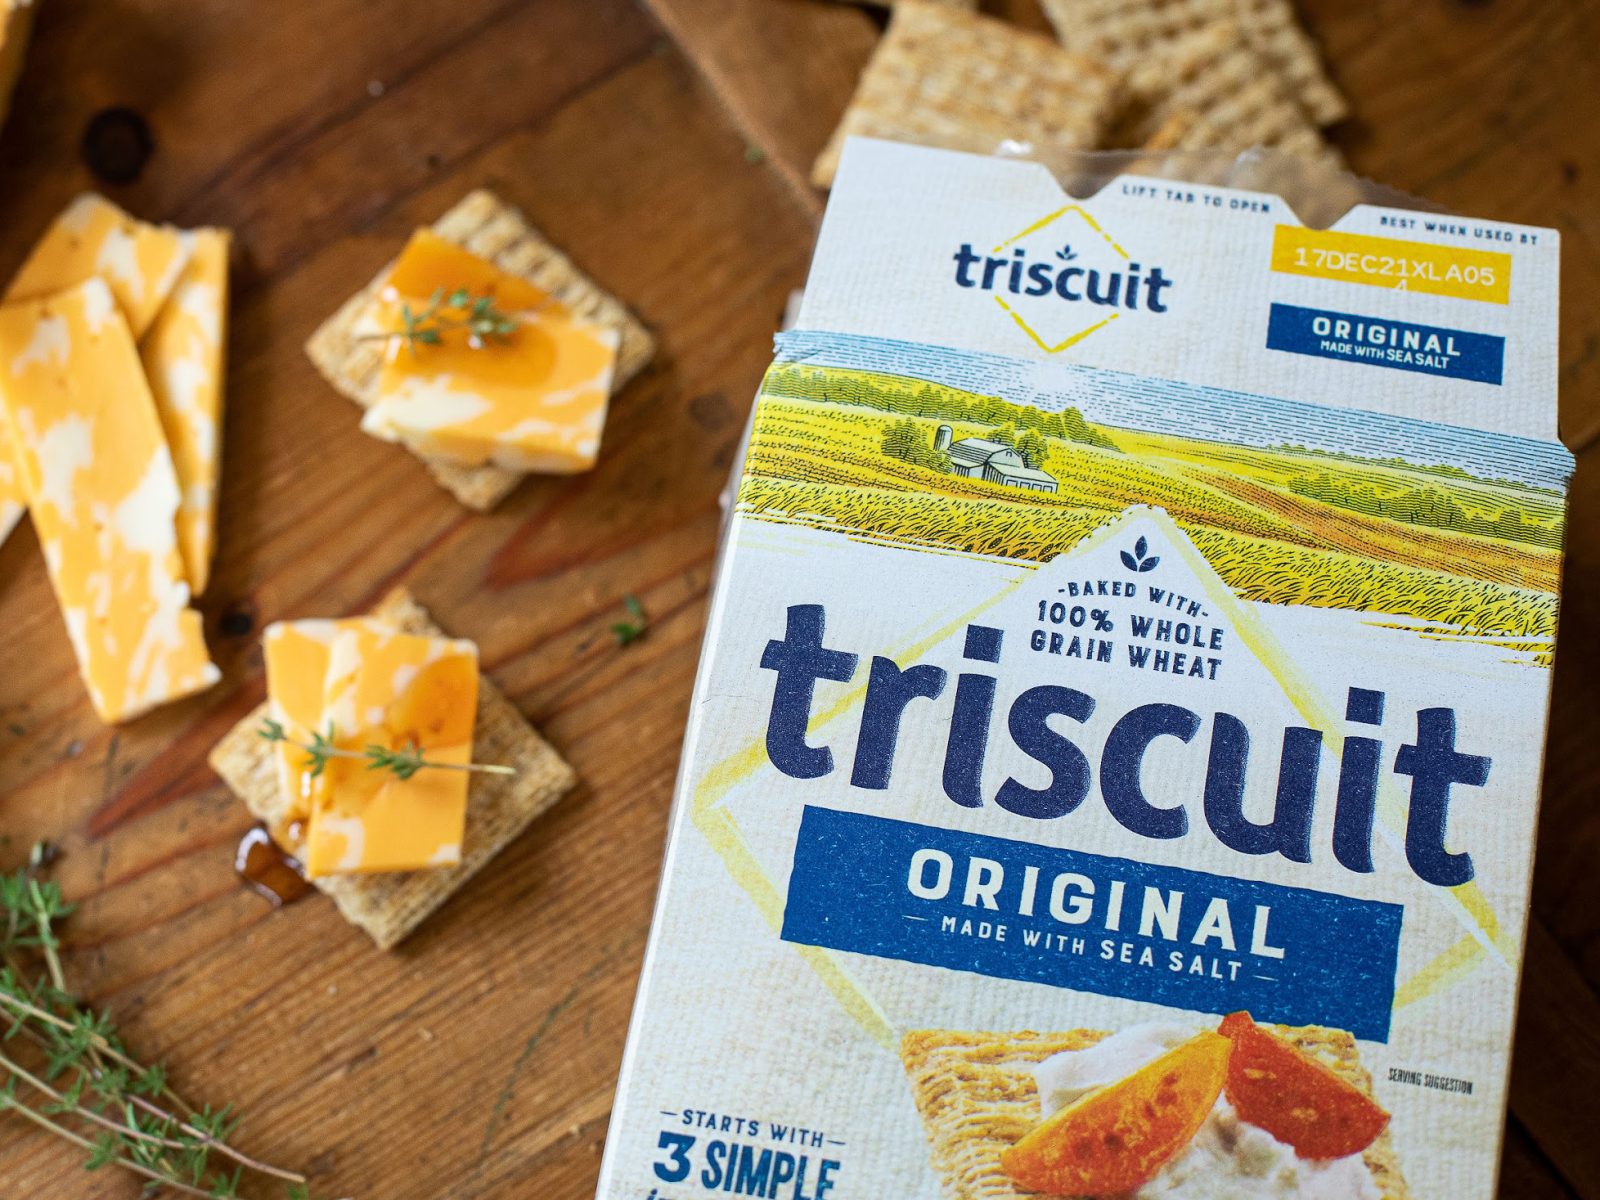 Triscuit Crackers Are Just $1.98 At Publix (Regular Price $4.10)